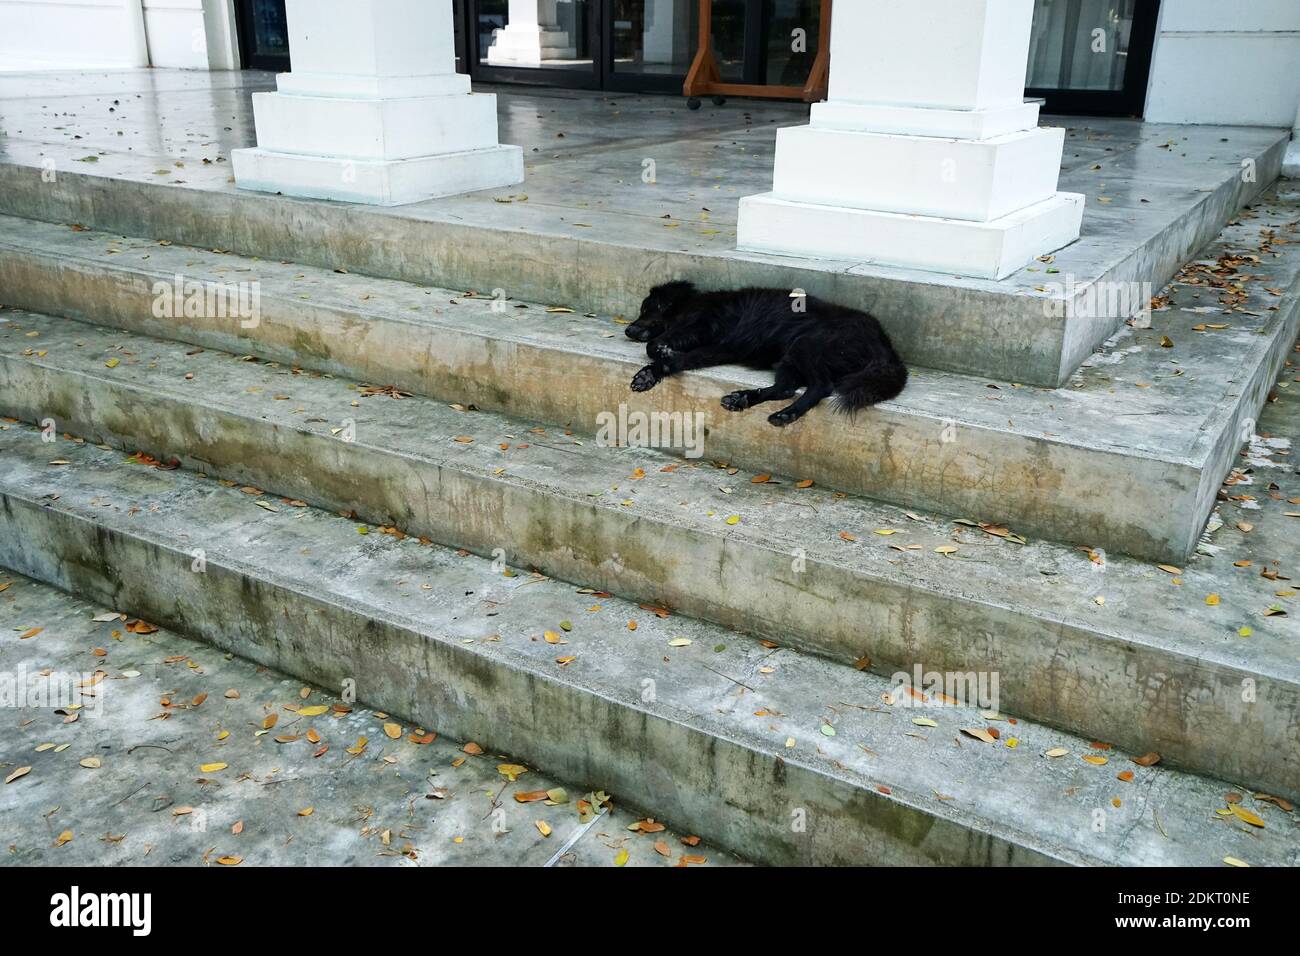 Black dog sleeping between concrete cement steps Stock Photo